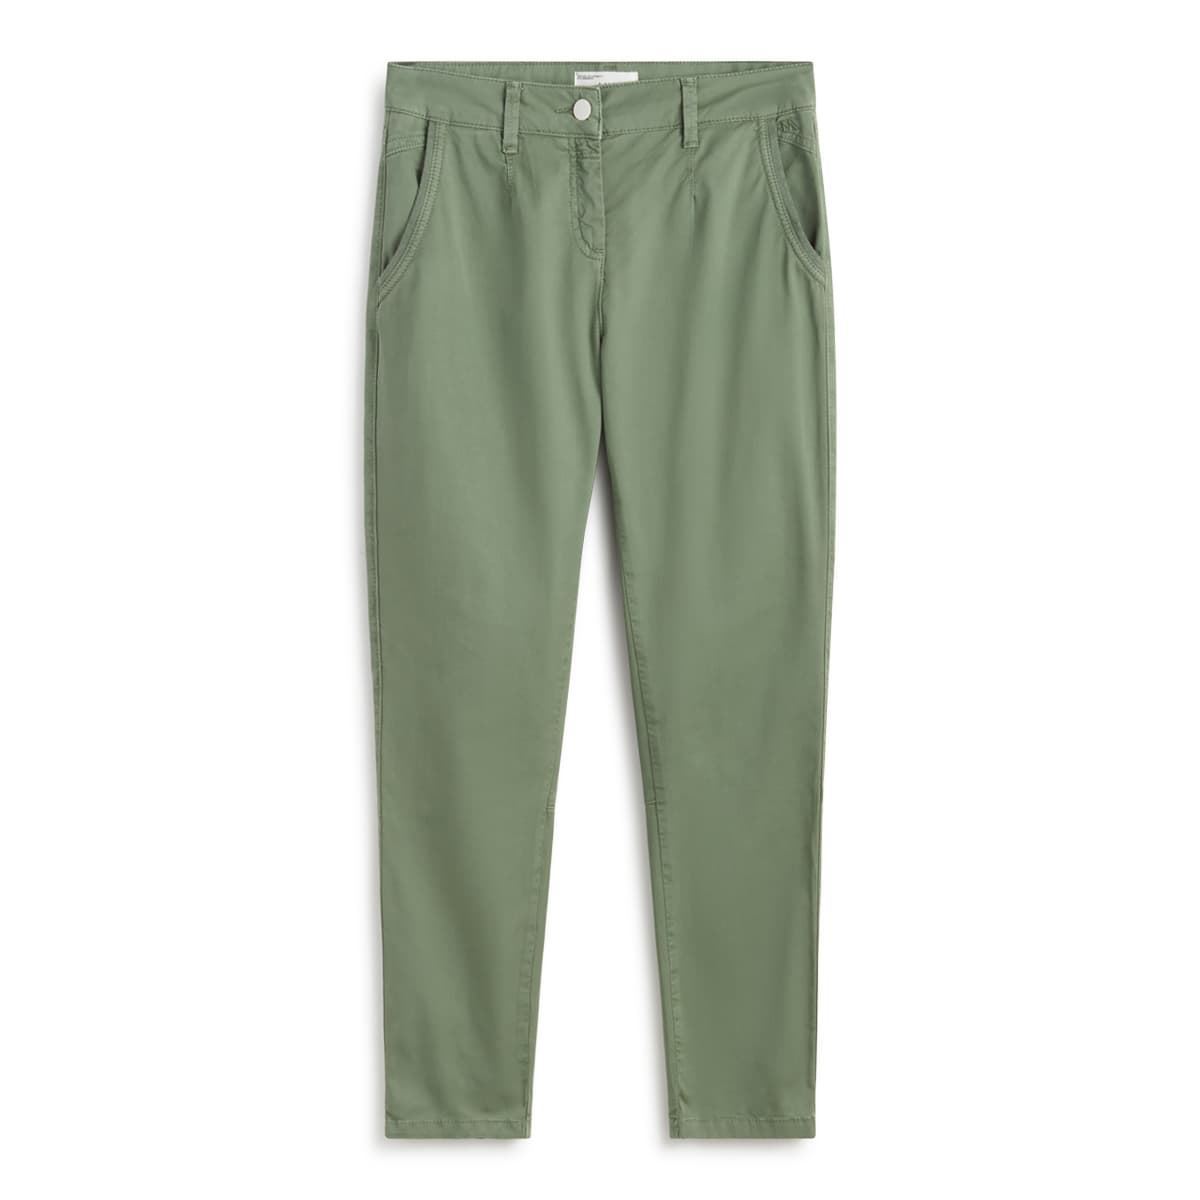 Pantalón verde kaki - Imagen 1